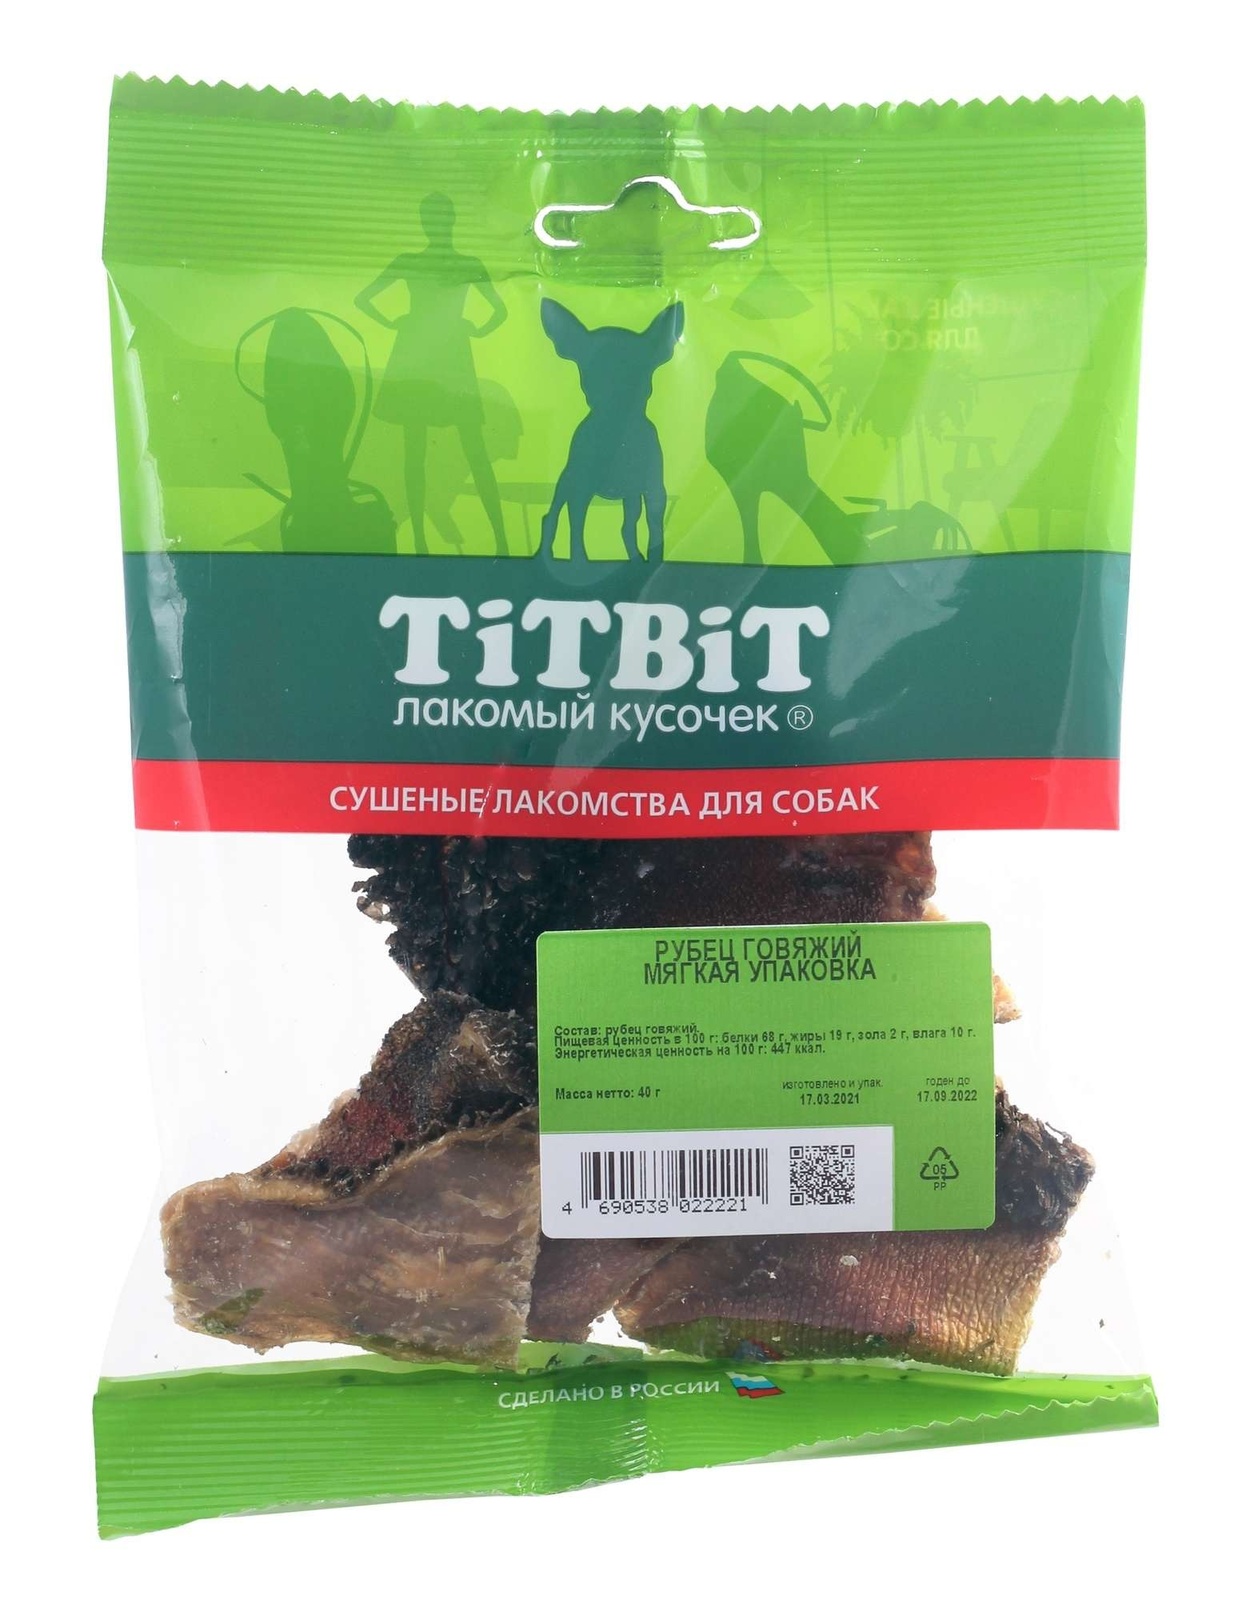 TiTBiT TiTBiT рубец говяжий - мягкая упаковка (40 г)